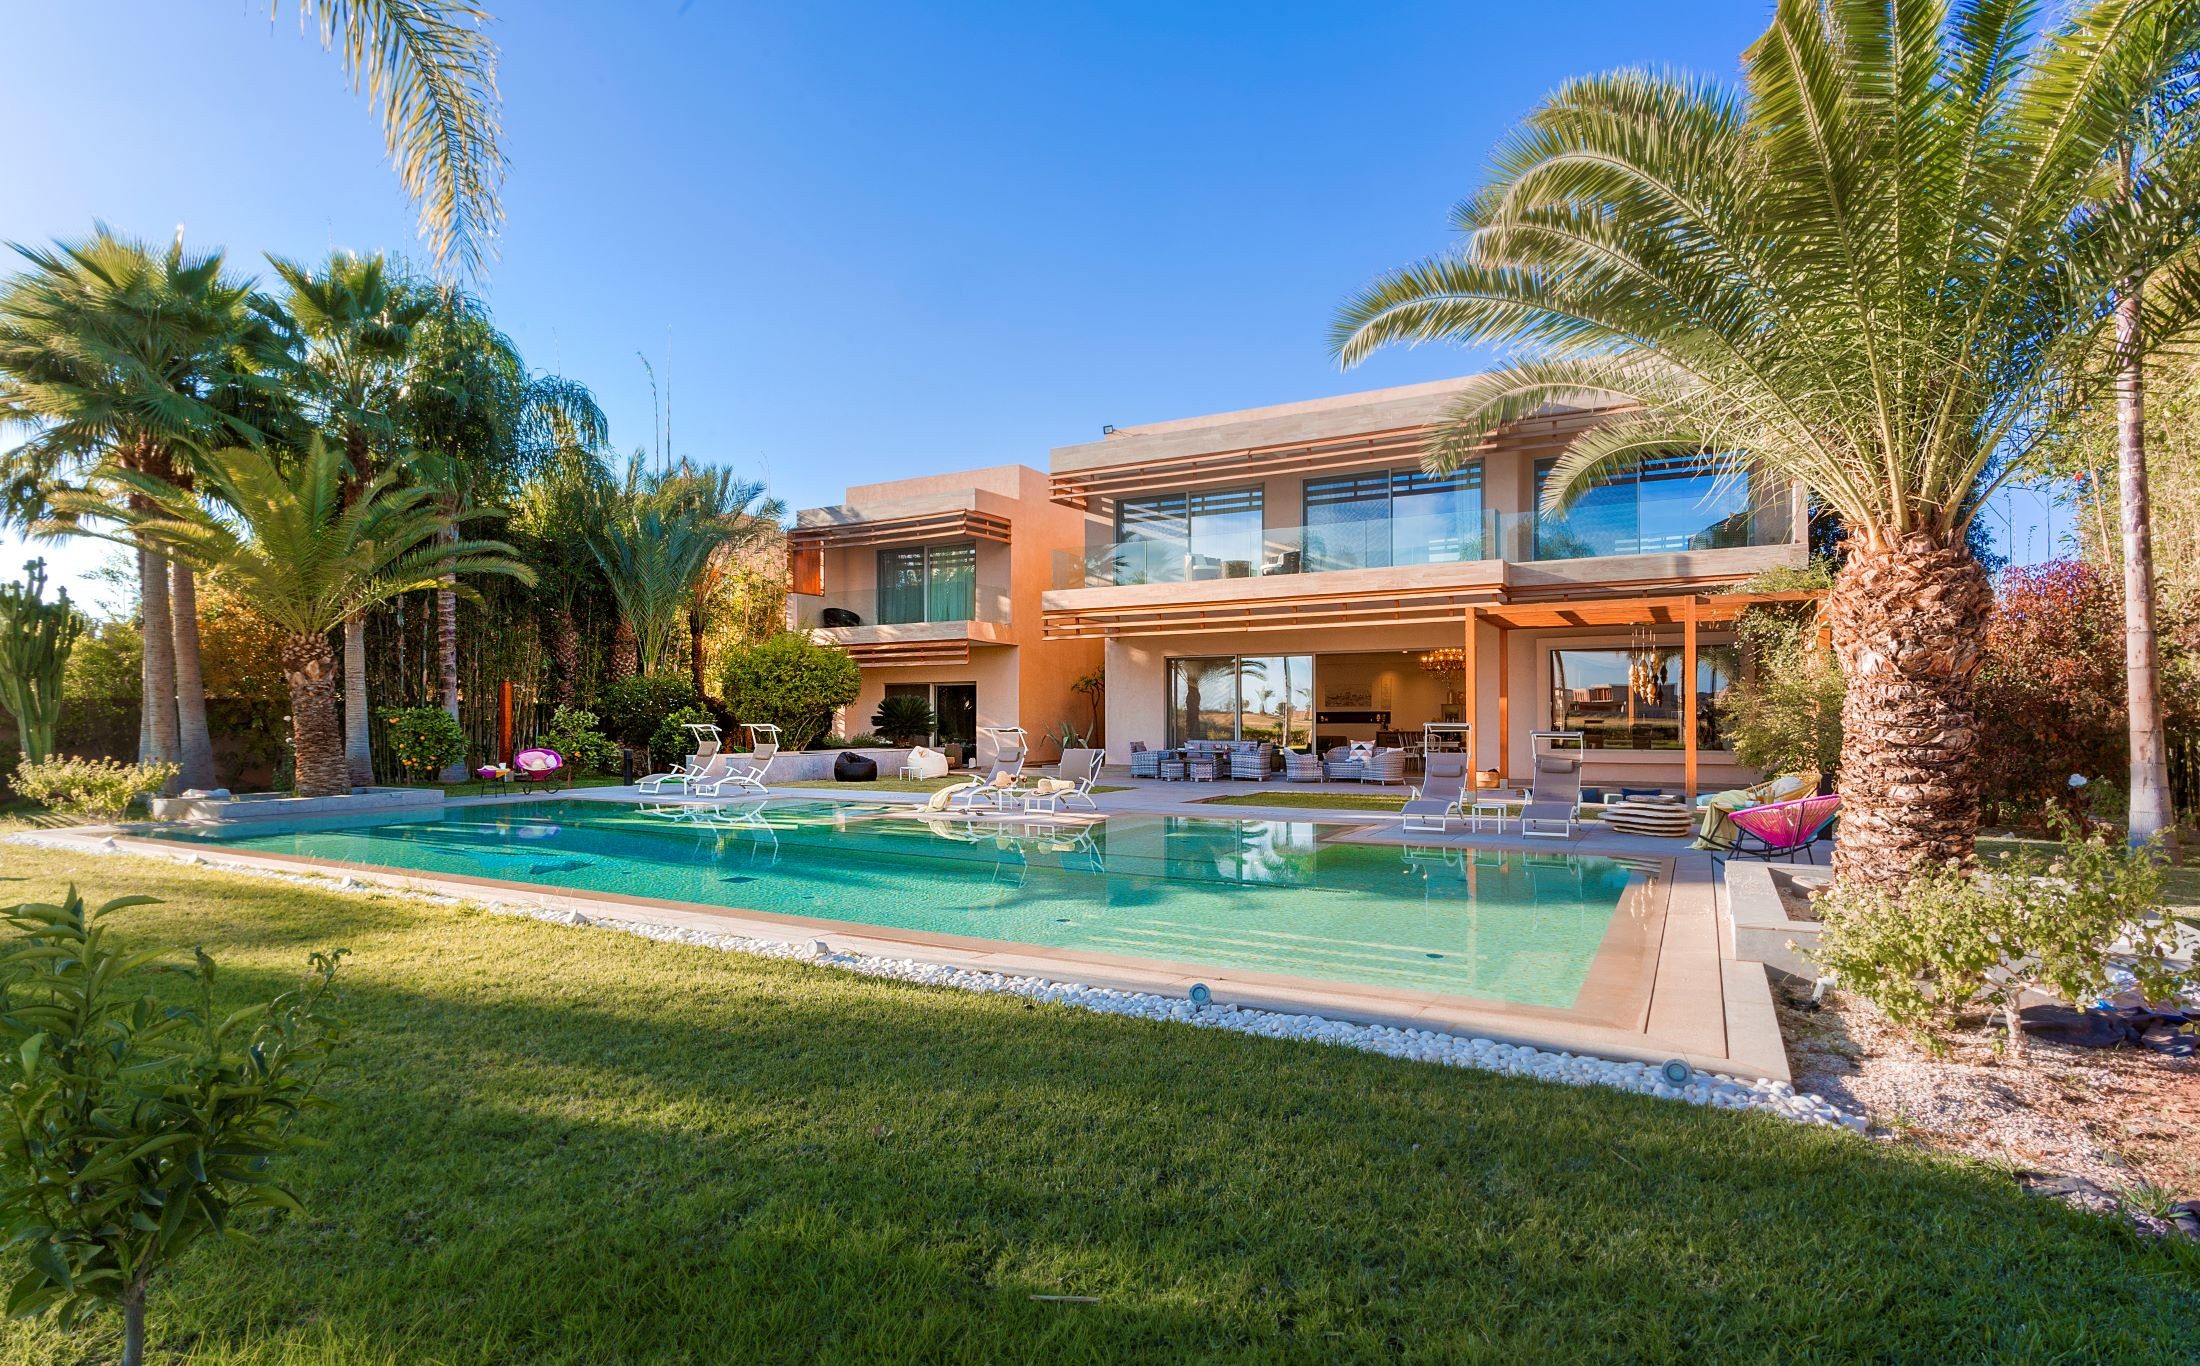 Villa Bliss for rent in Marrakech